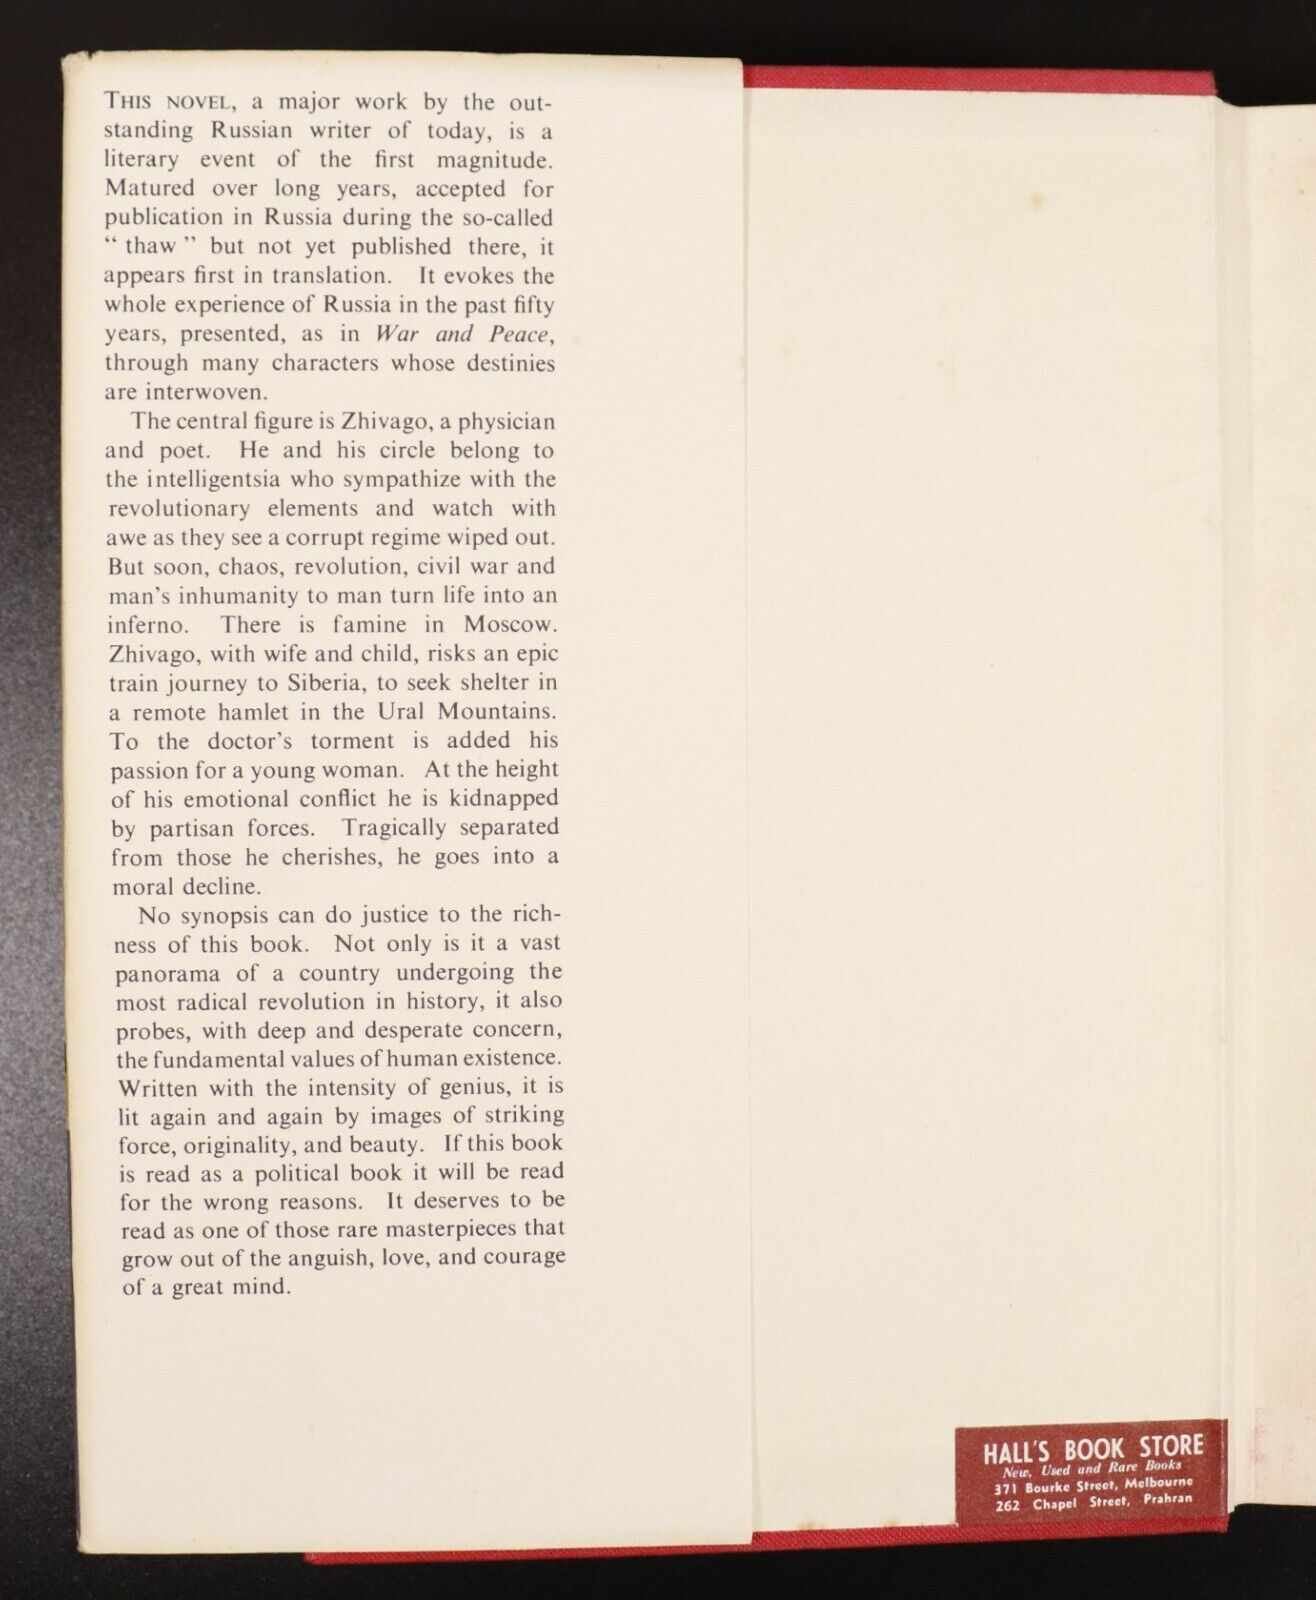 1959 Doctor Zhivago by Boris Pasternak Vintage Classic Fiction Book Literature